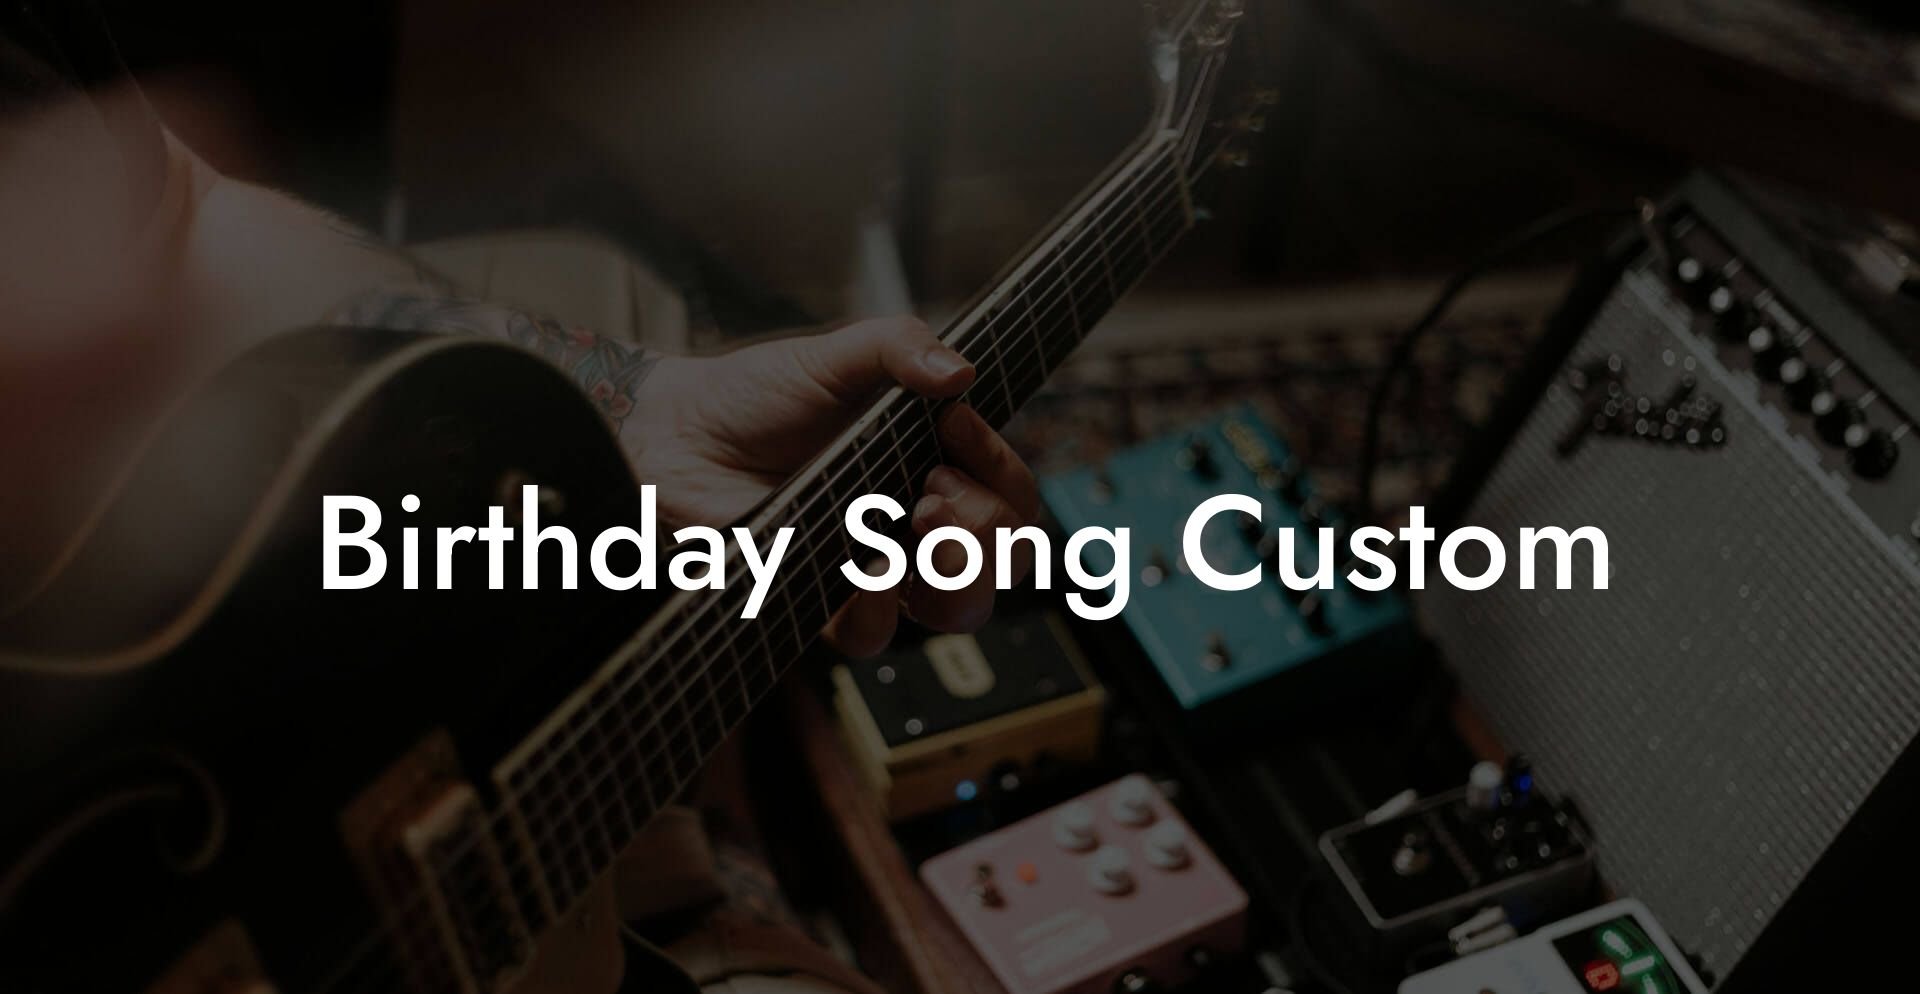 birthday song custom lyric assistant